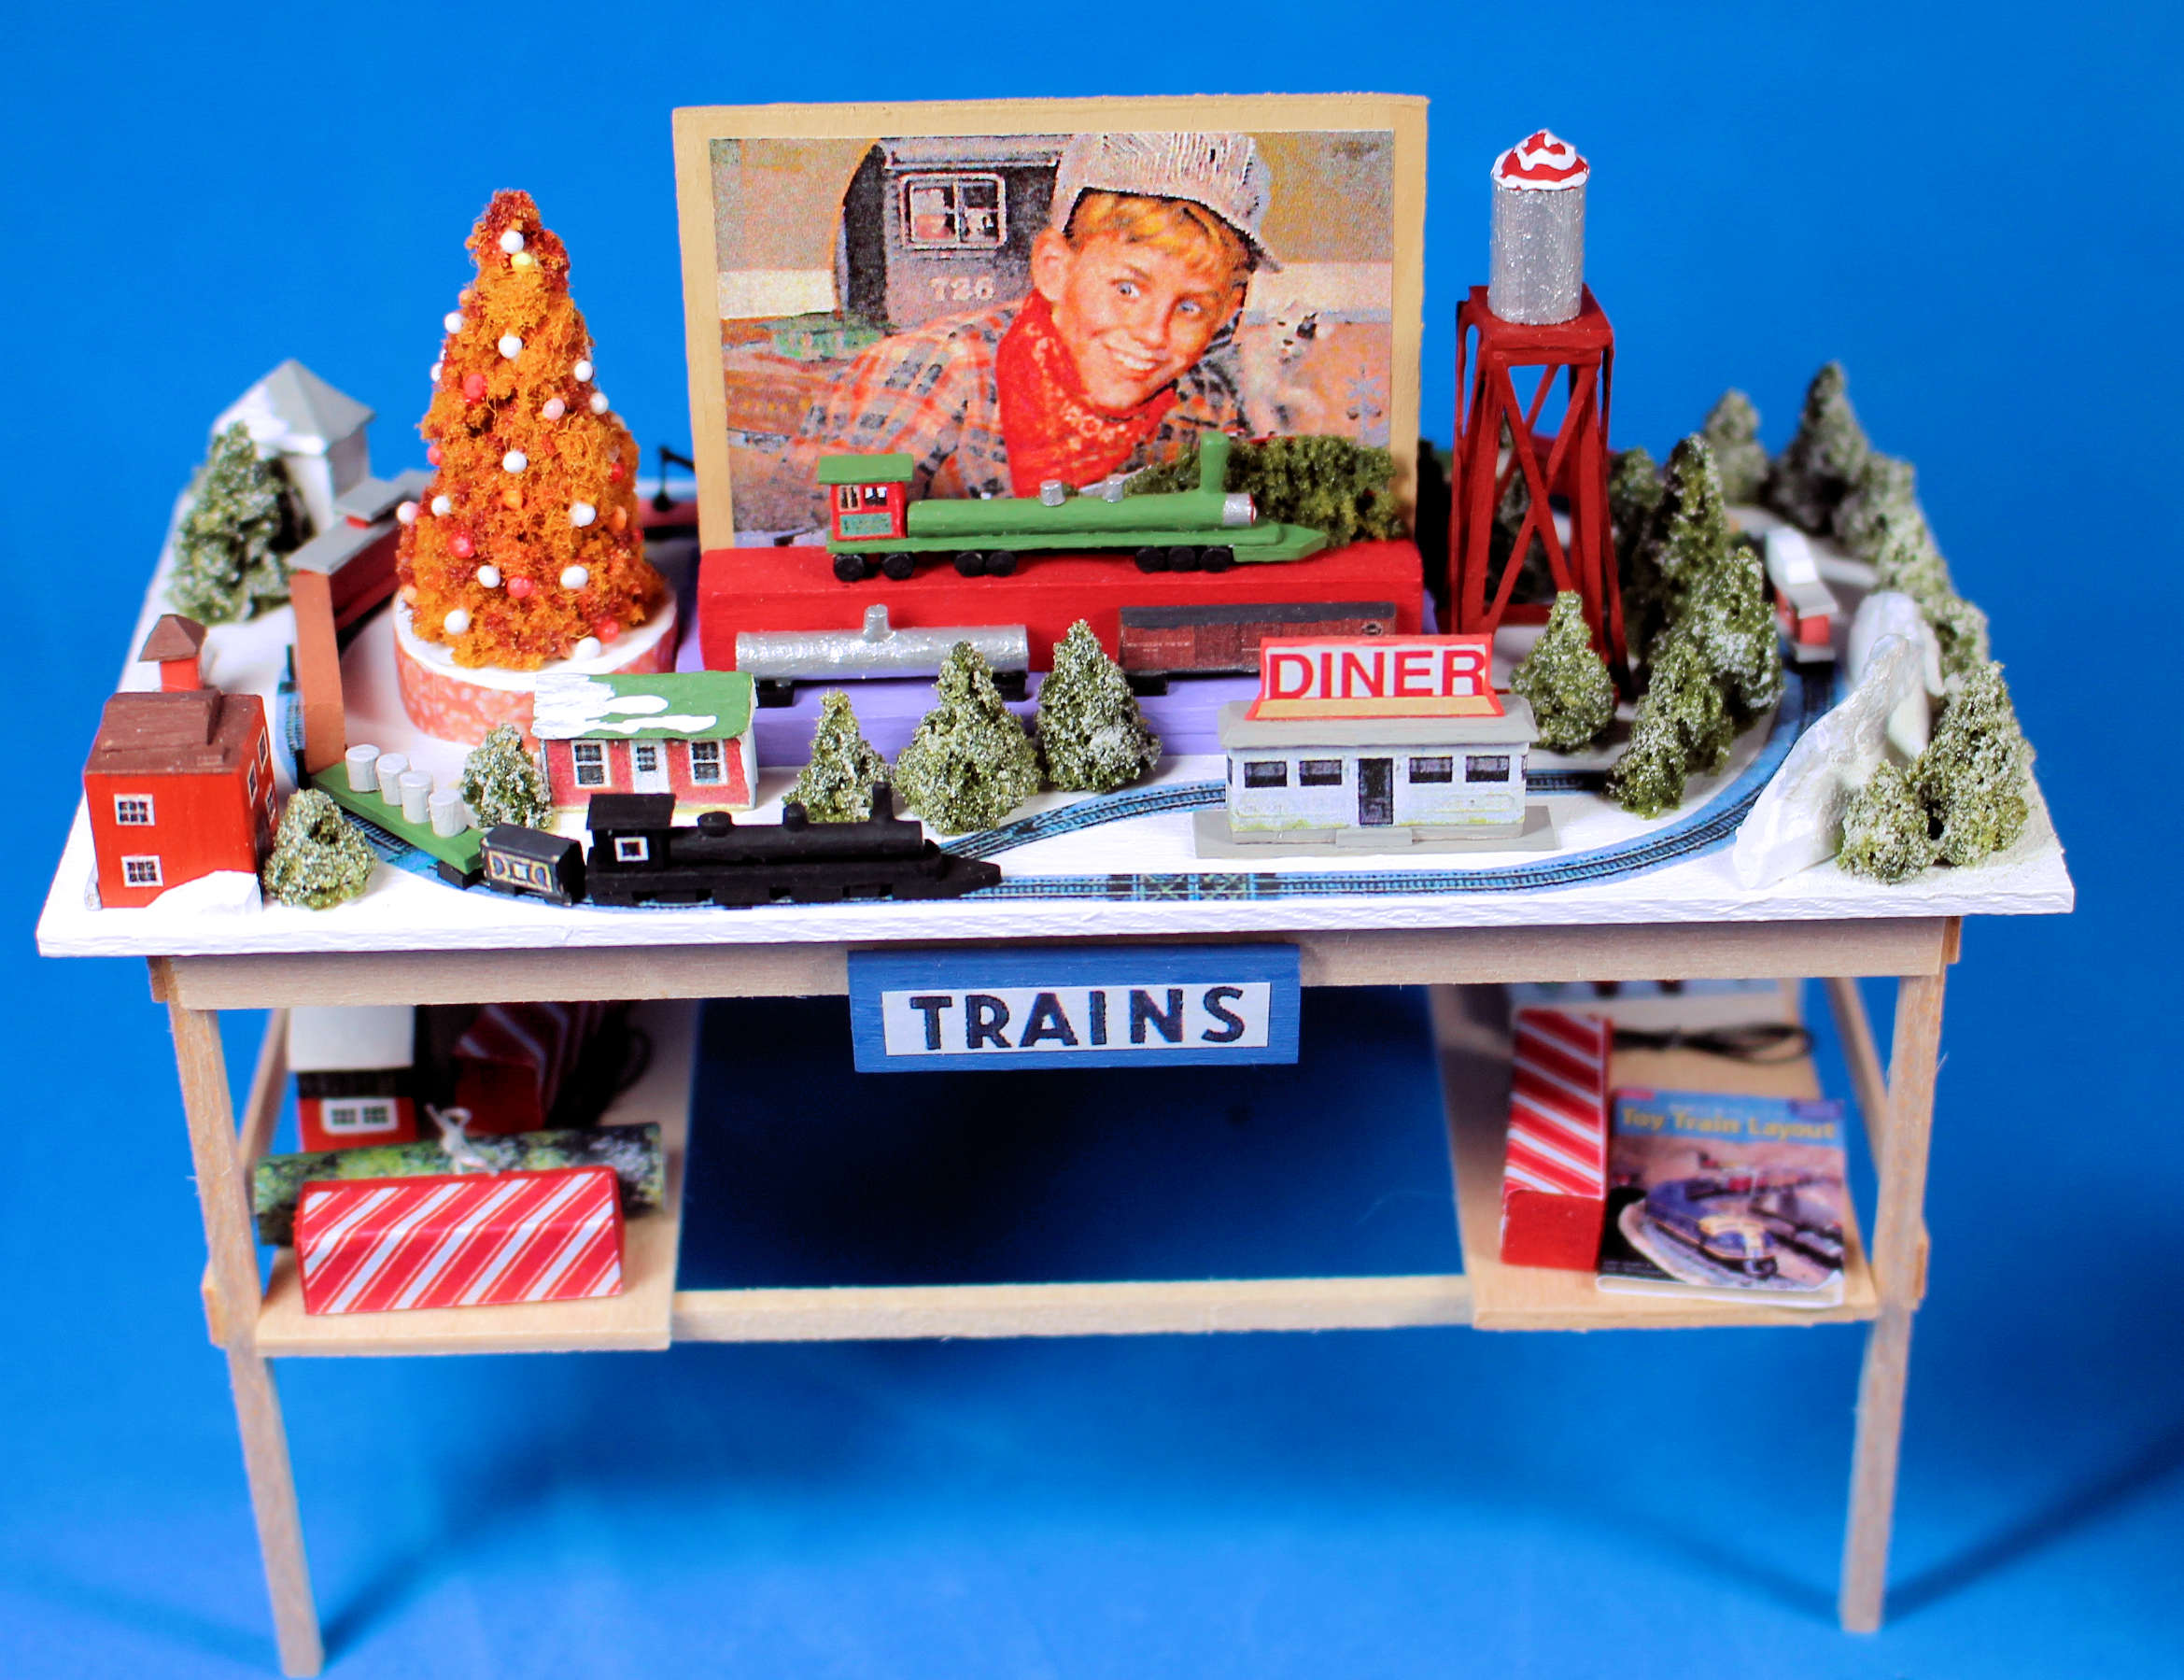 Model train set - Christmas/hobby shop display